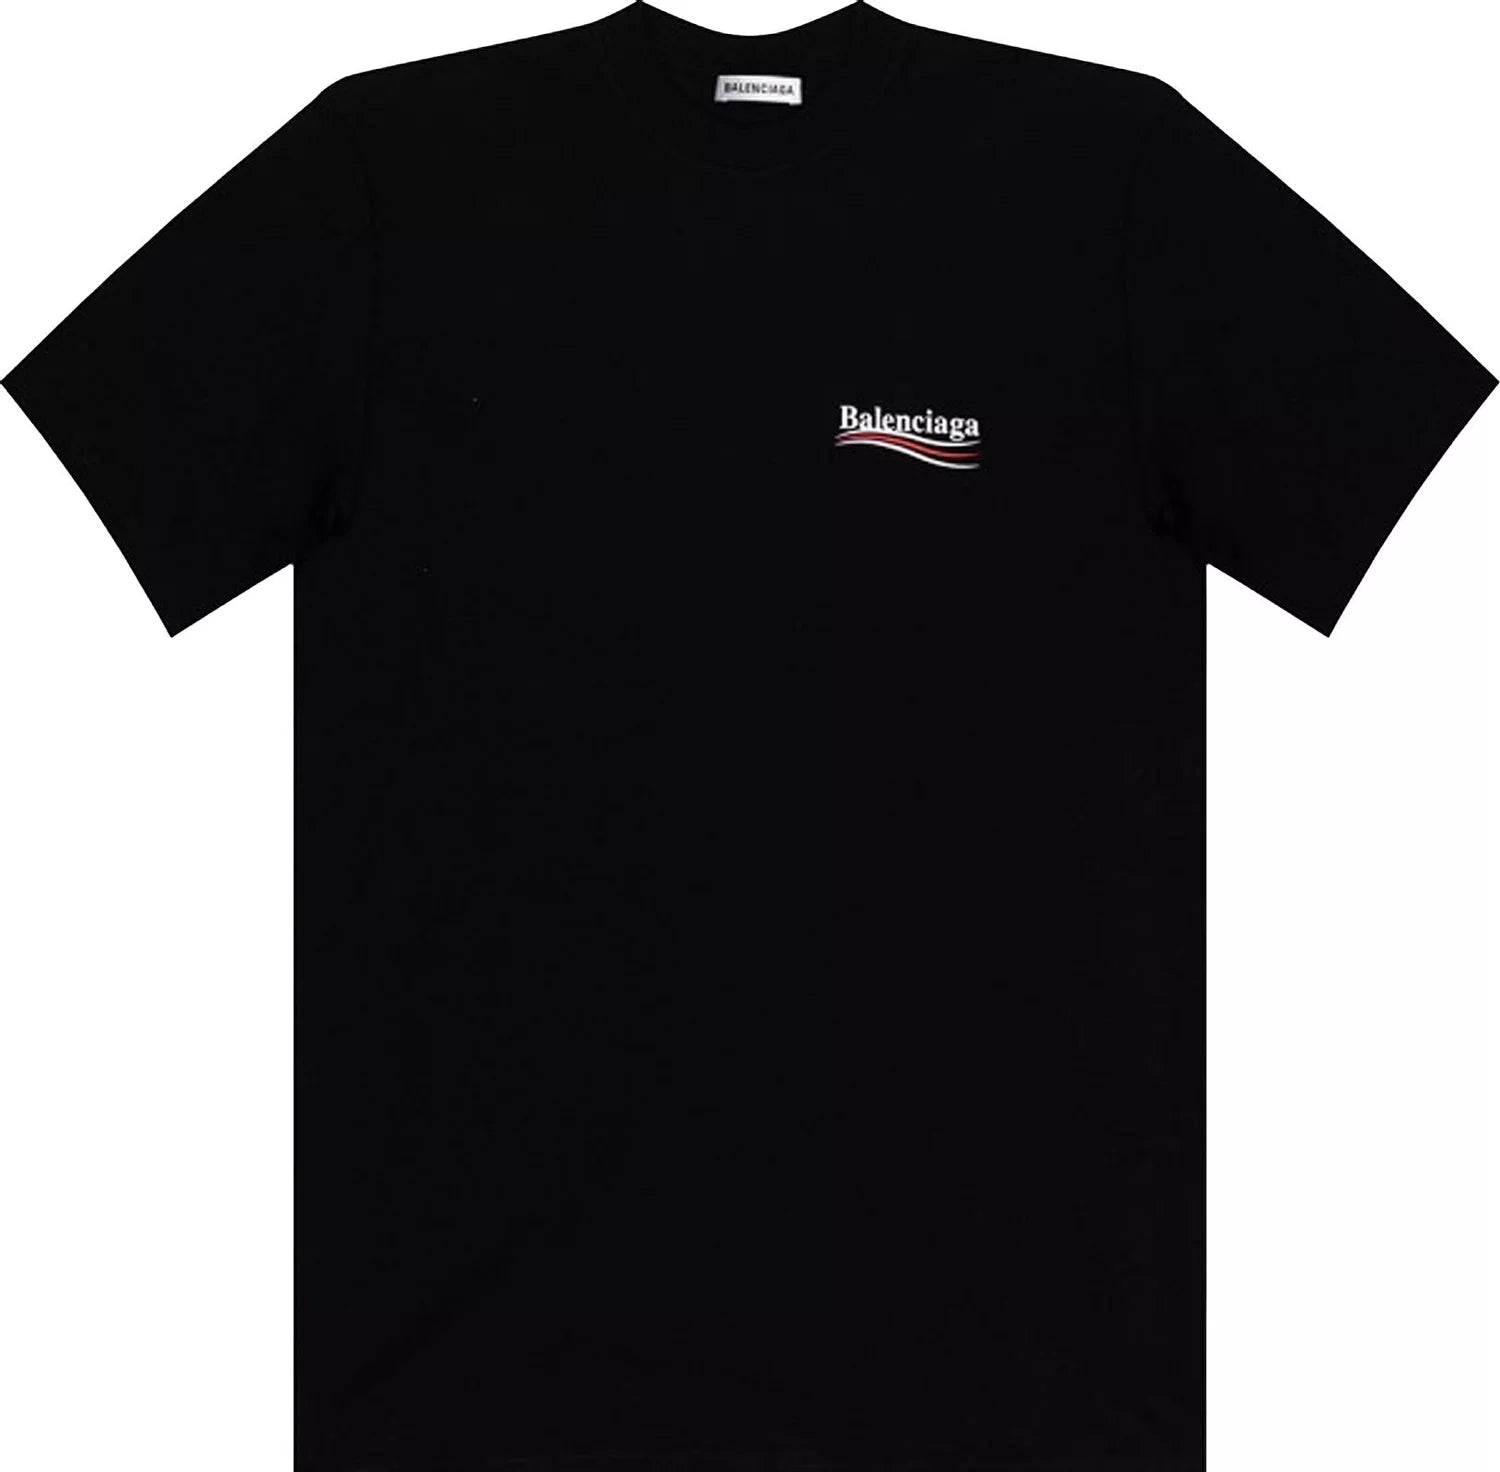 Balenciaga Political Campaign T-Shirt 'Black' - RepKings